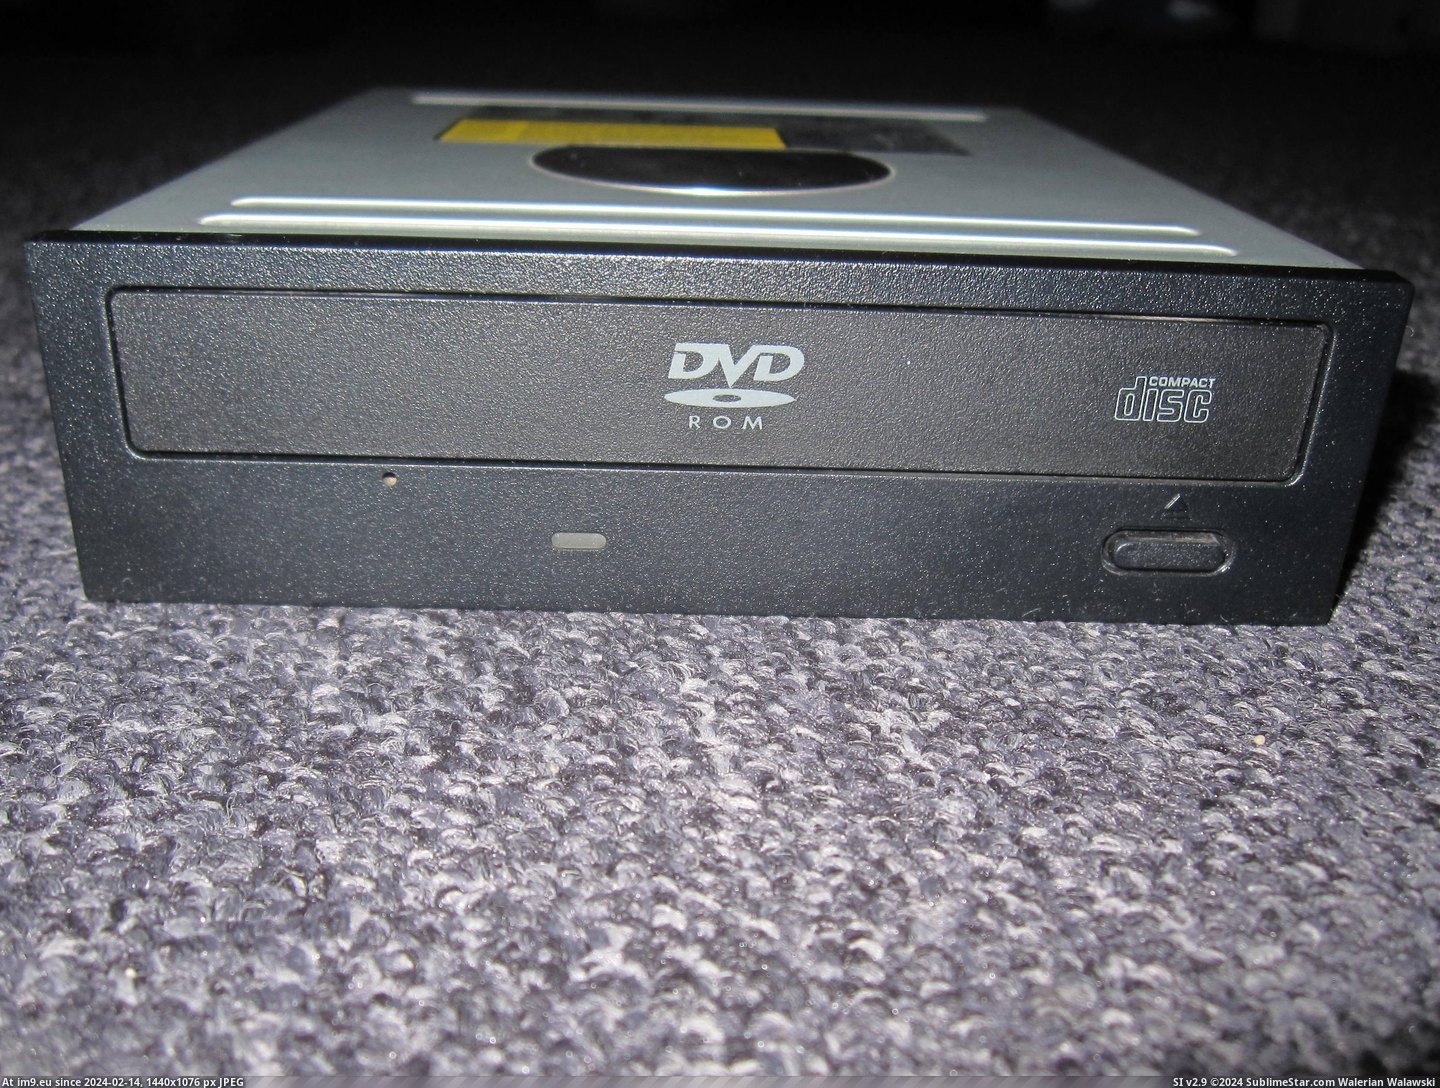 #Rom  #Dvd IMG_1371 Pic. (Image of album DVD-ROM))